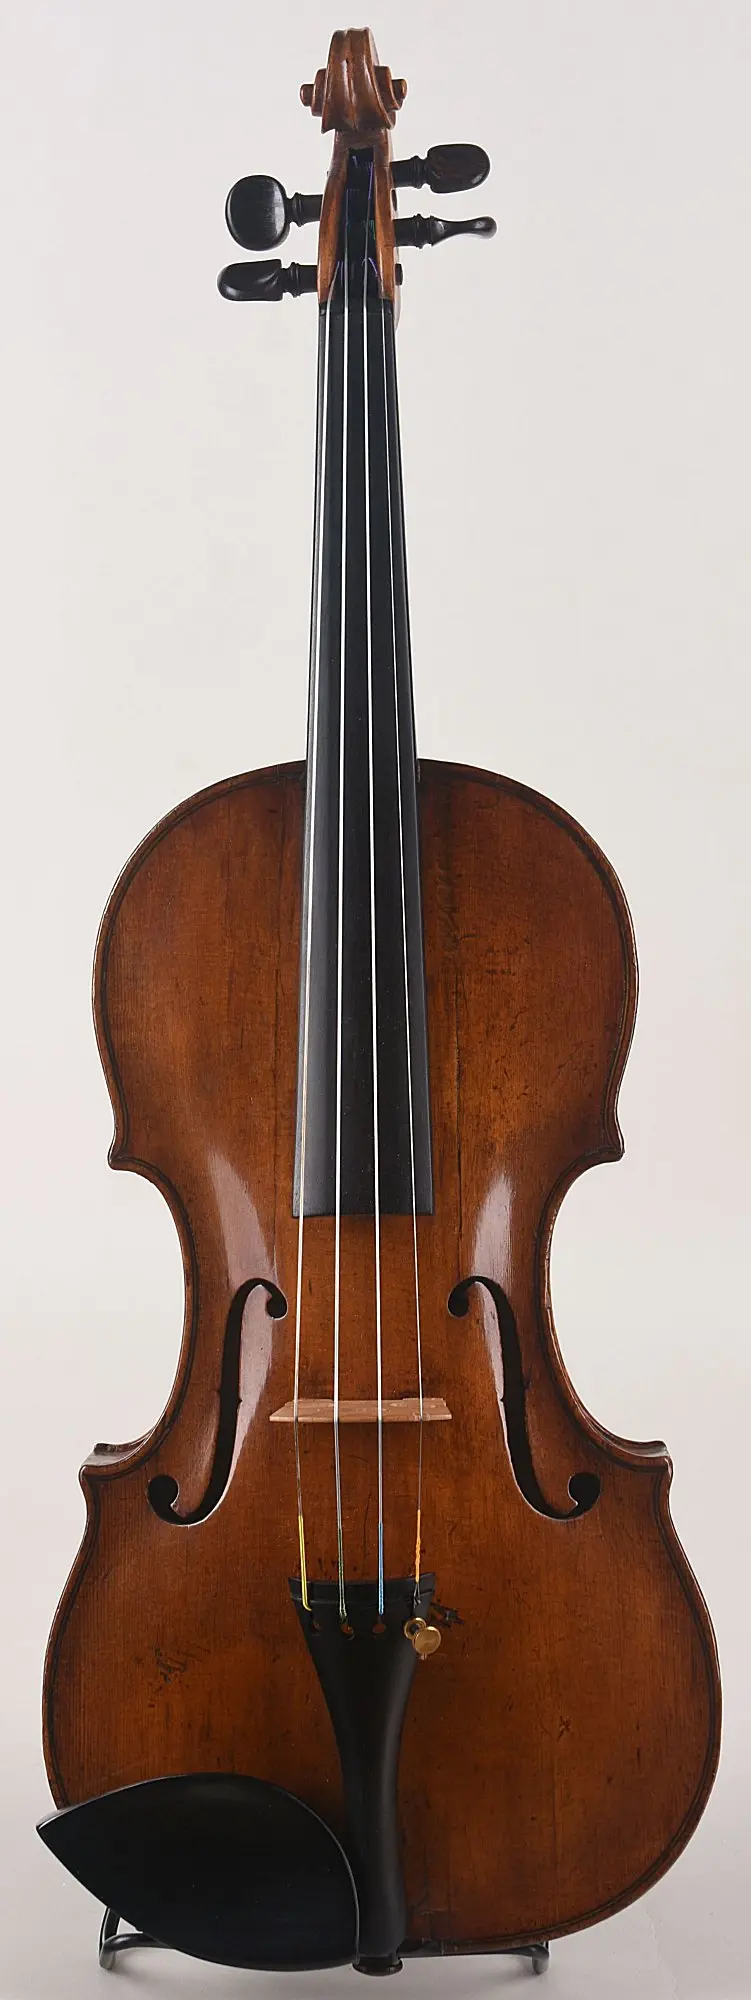 tyrolean violin - What is a Tyrolean violin